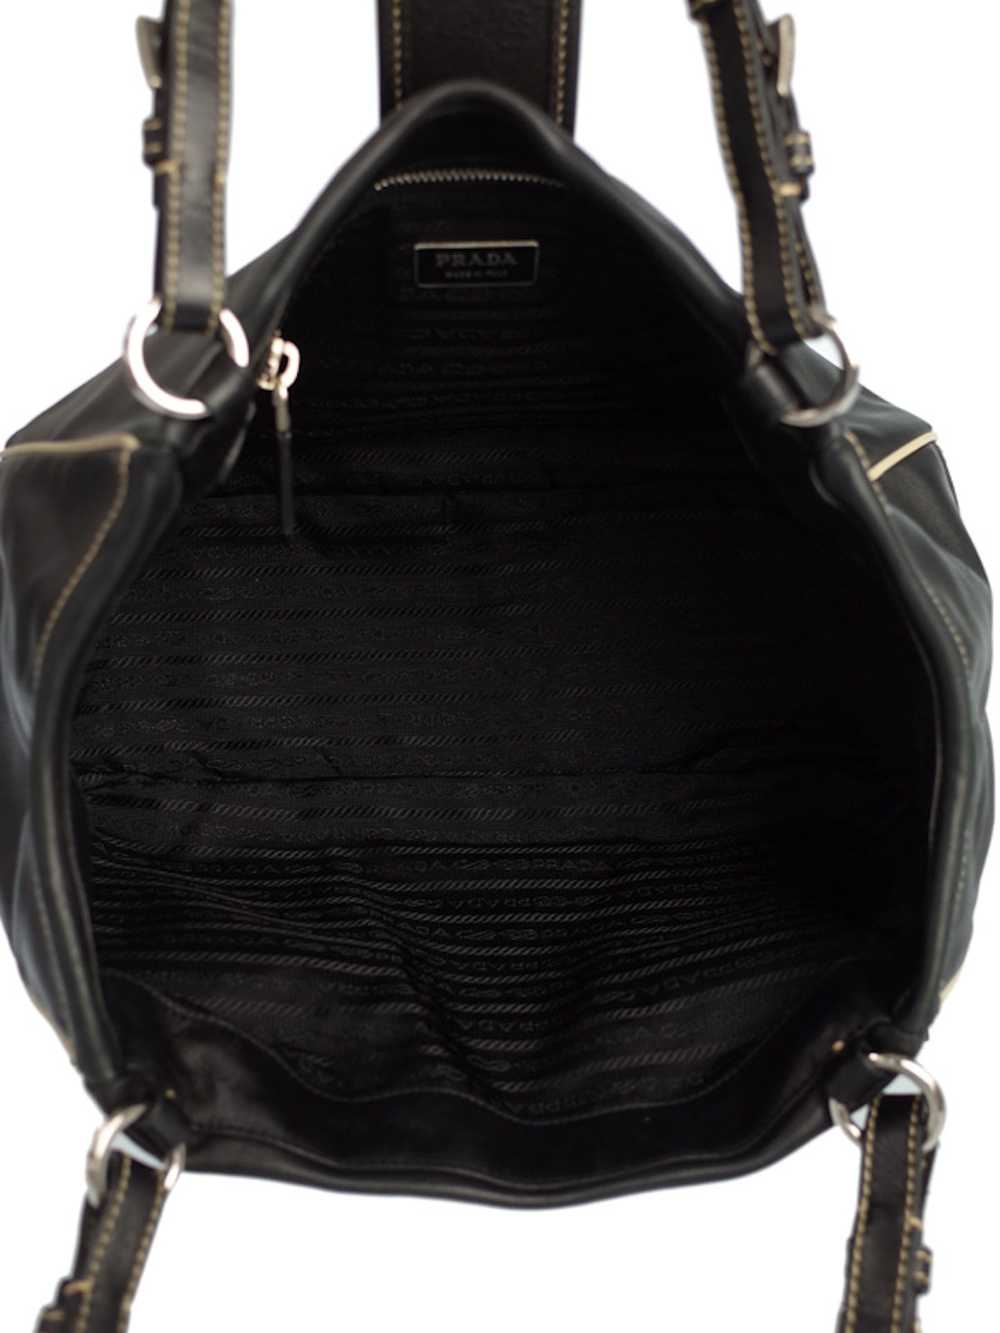 Prada Prada Leather Shoulder Bag Black - image 3